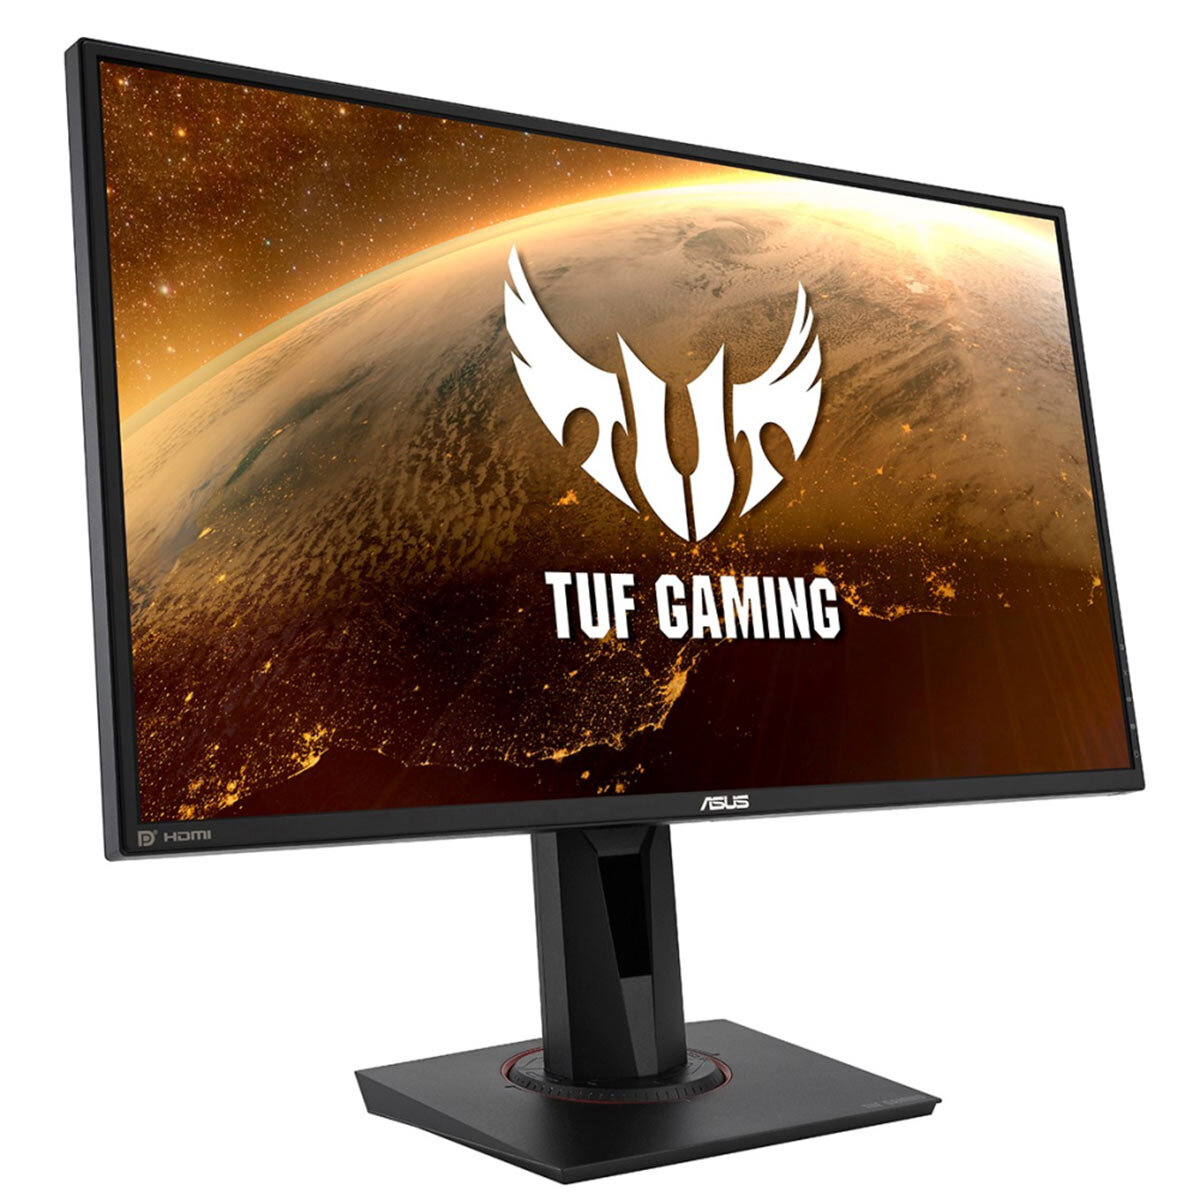 Buy ASUS TUF 27 Inch Gaming Monitor, VG279QM at Costco.co.uk